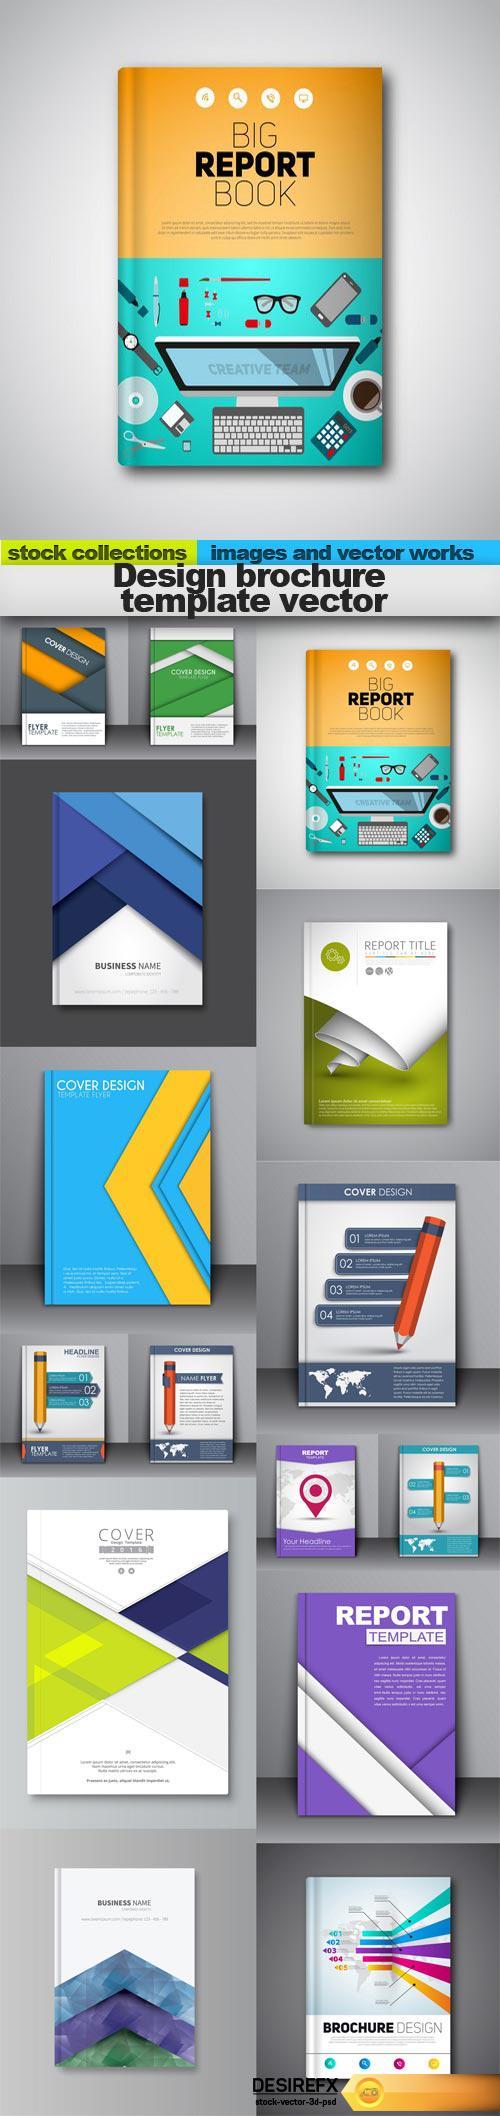 Design brochure template vector, 15 x EPS